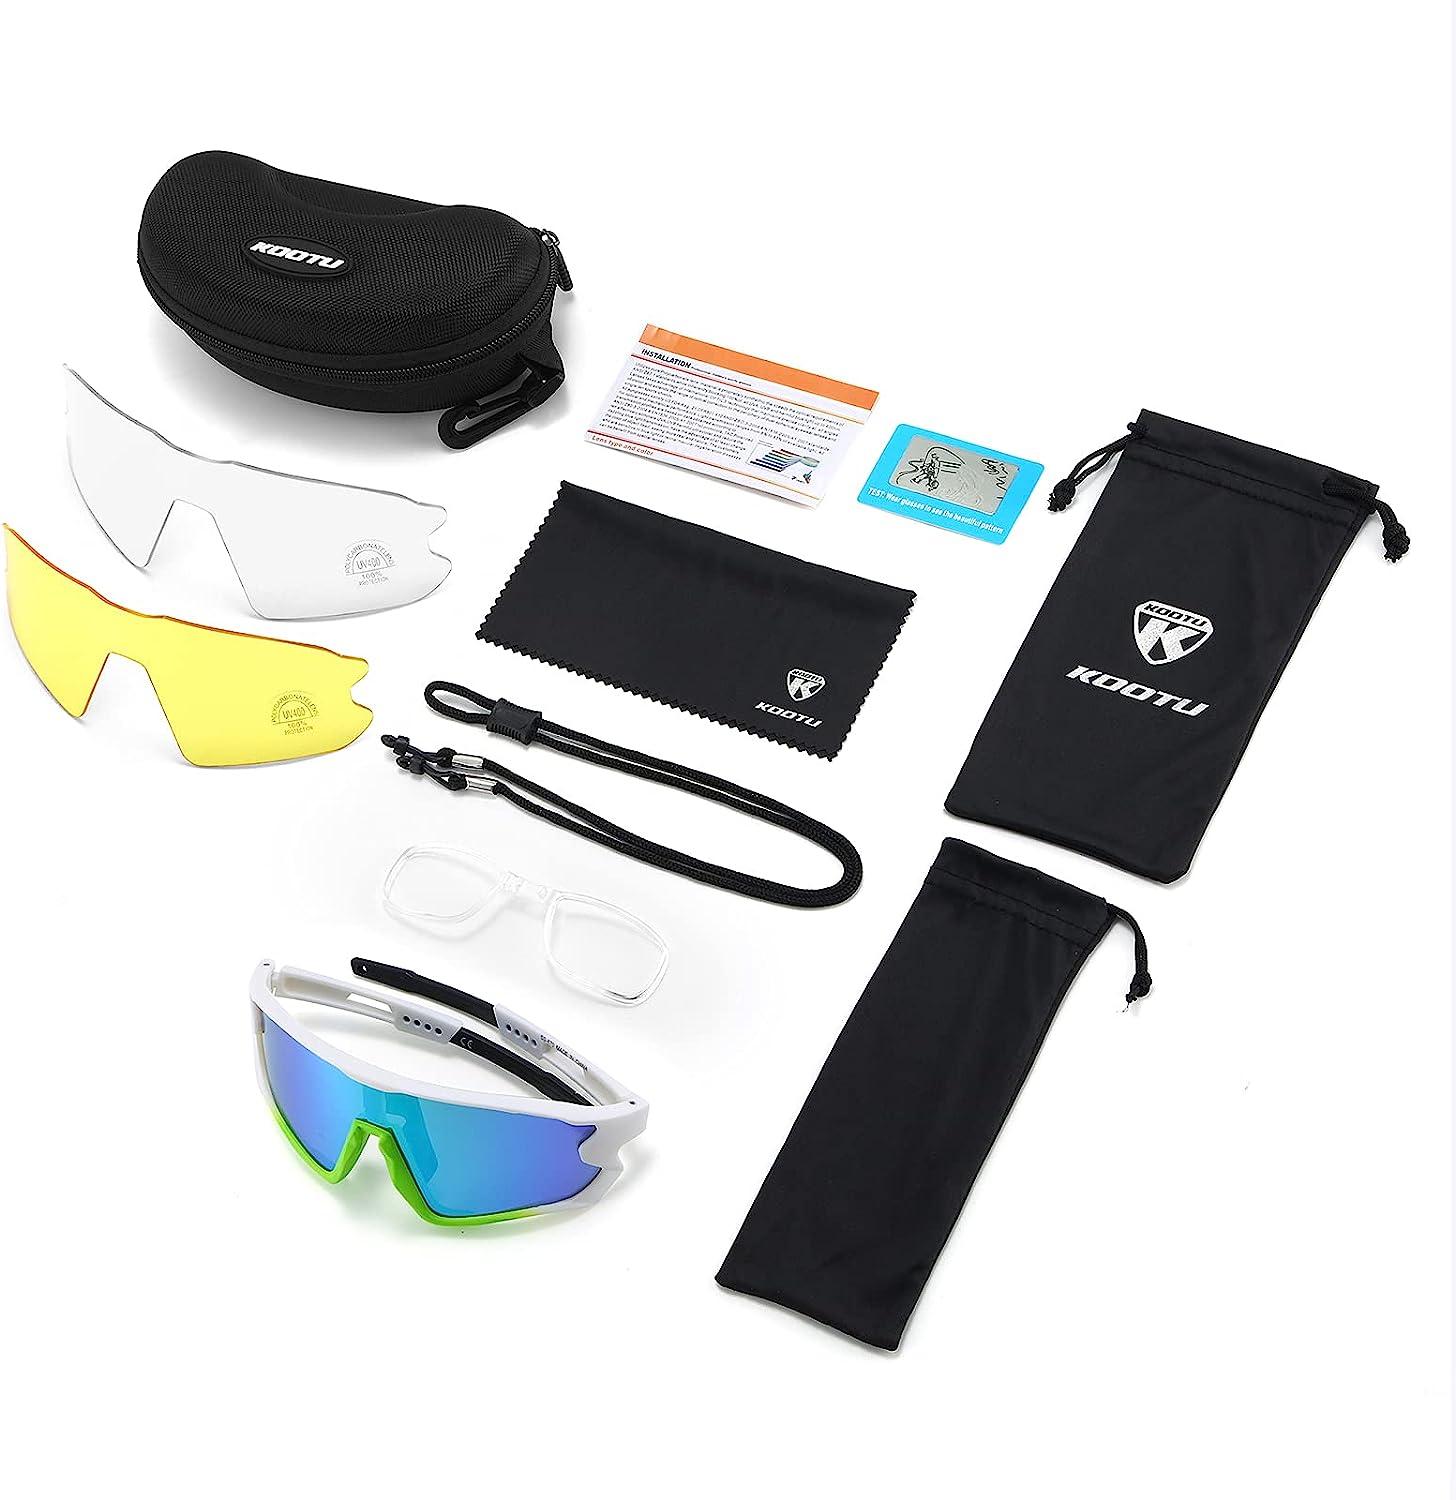 KOOTU Cycling Sunglasses 5 LENS Bike Eyewear UV400 Sports